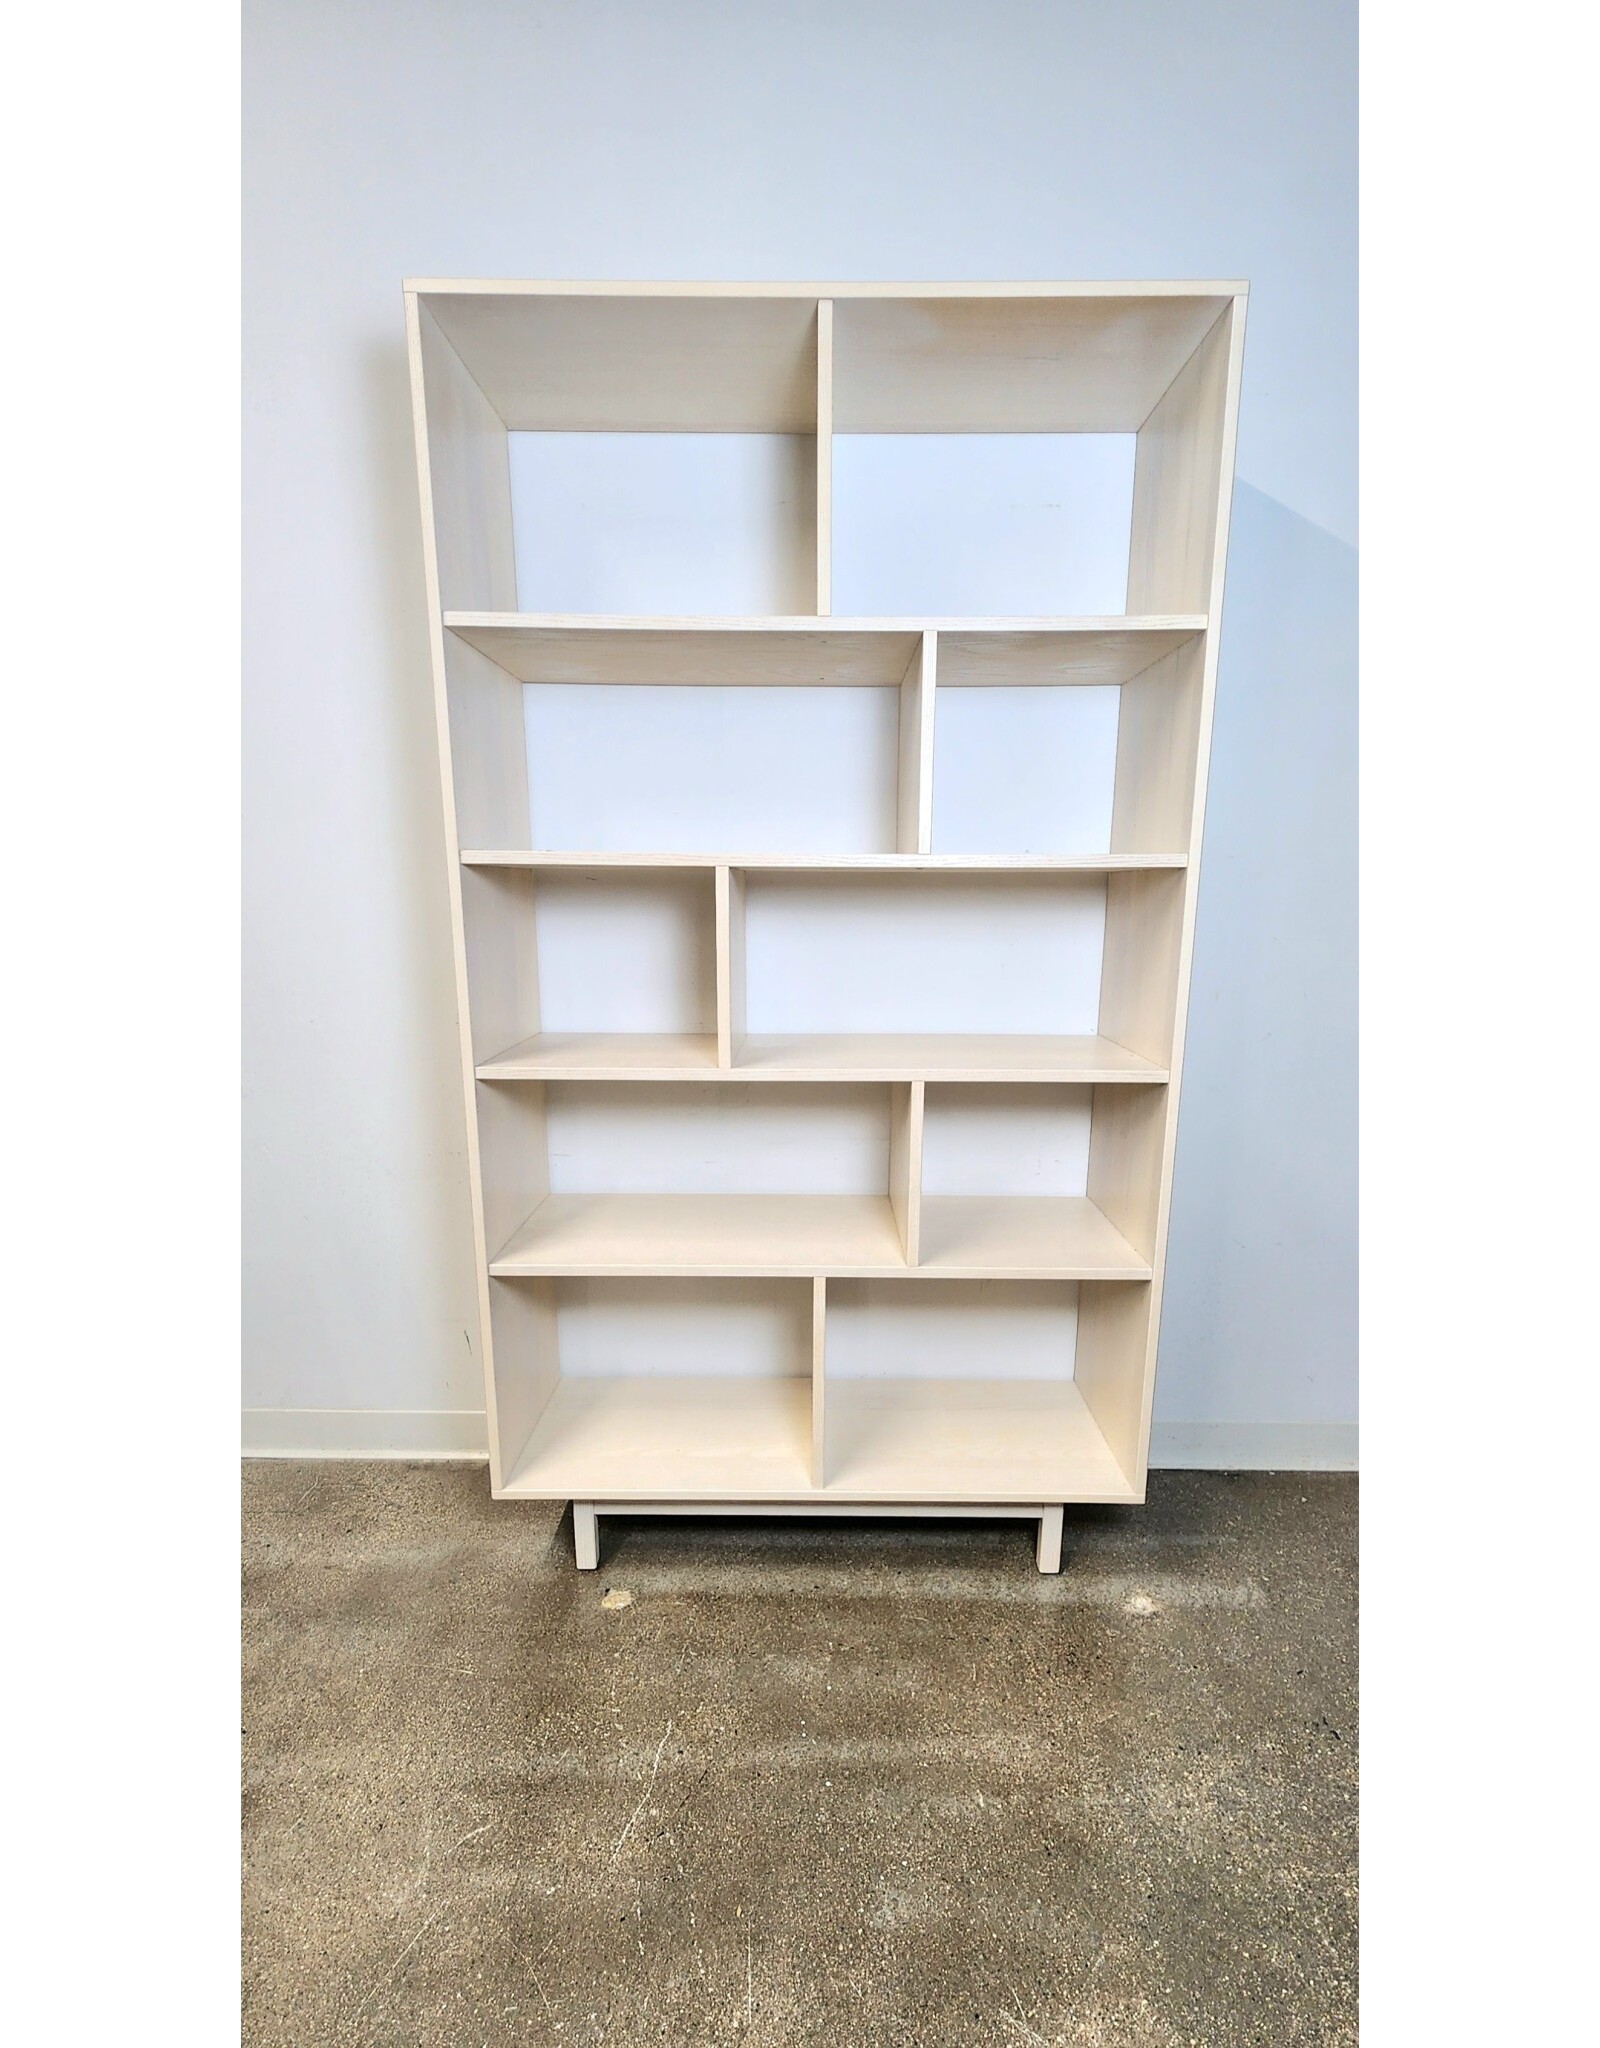 Tall Cream Bookshelf by Spectra Wood